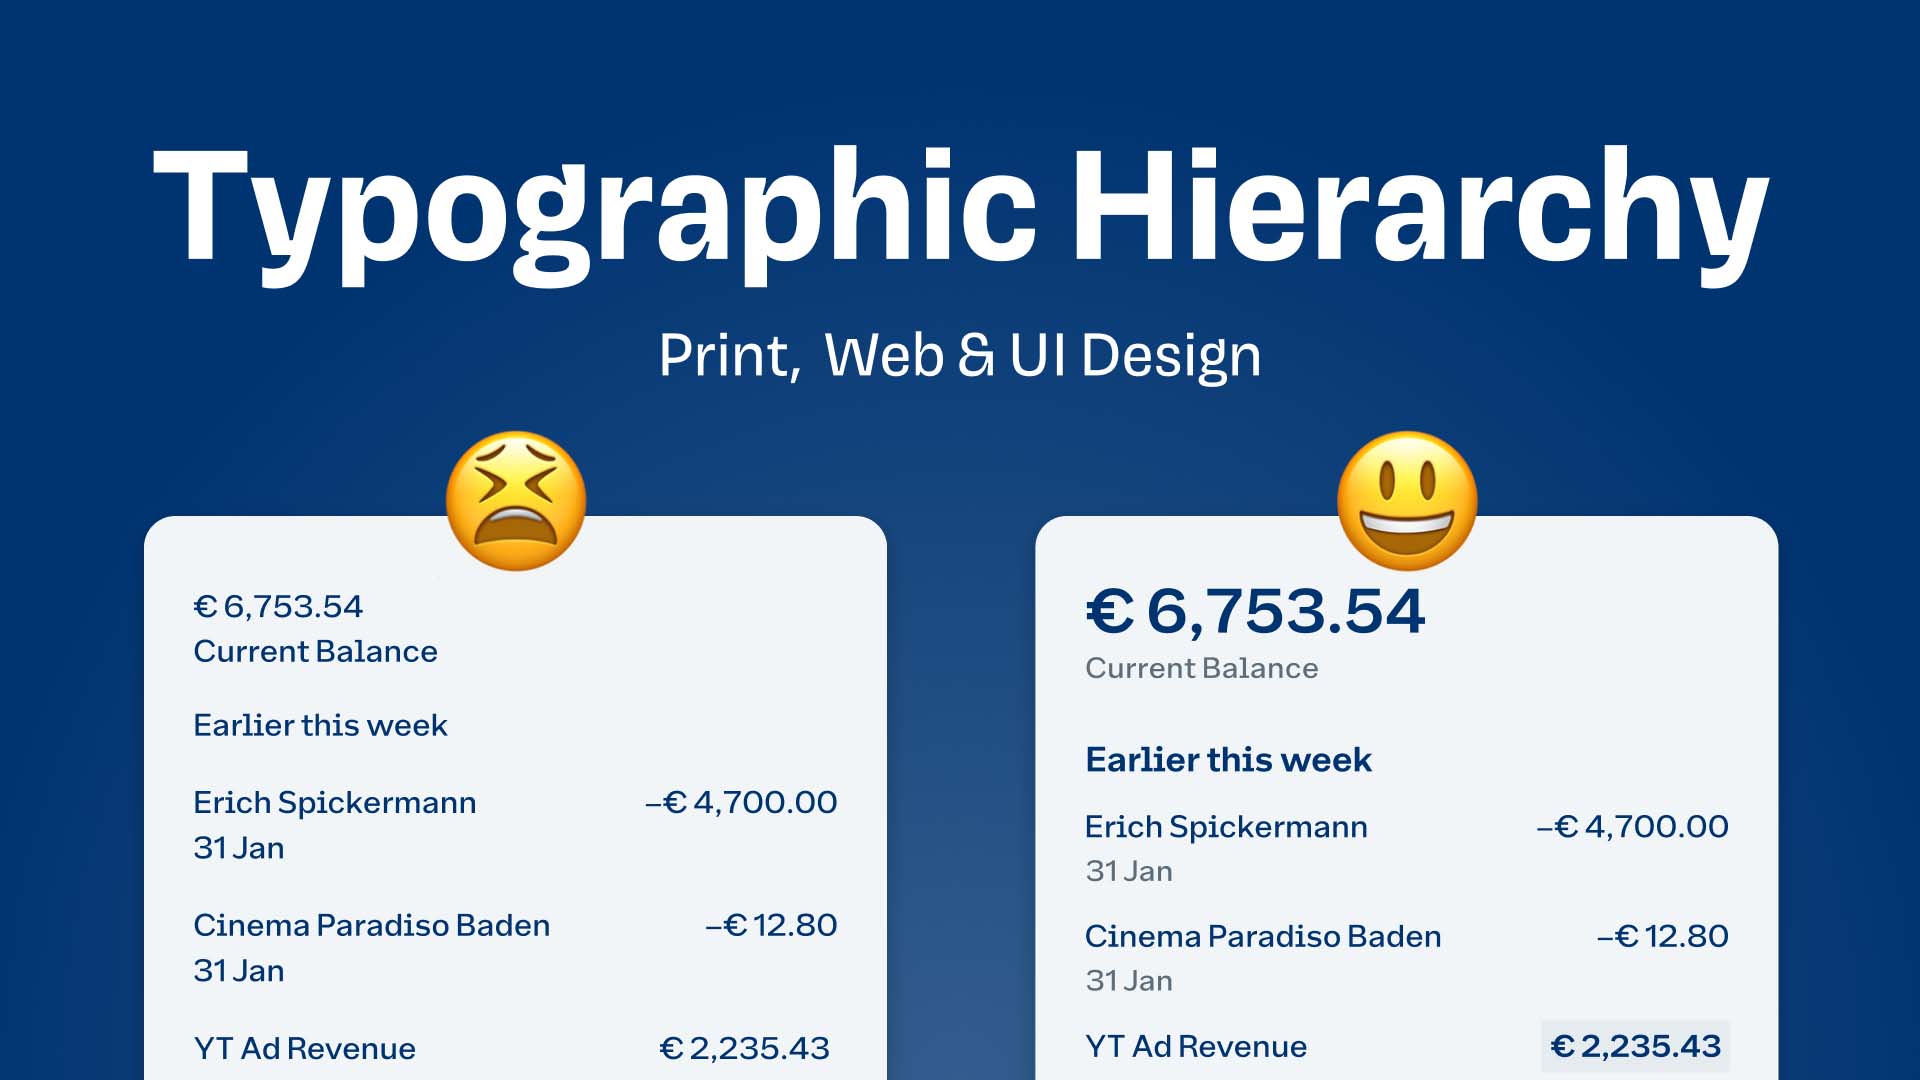 Typographic Hierarchy in Print, Web & UI Design